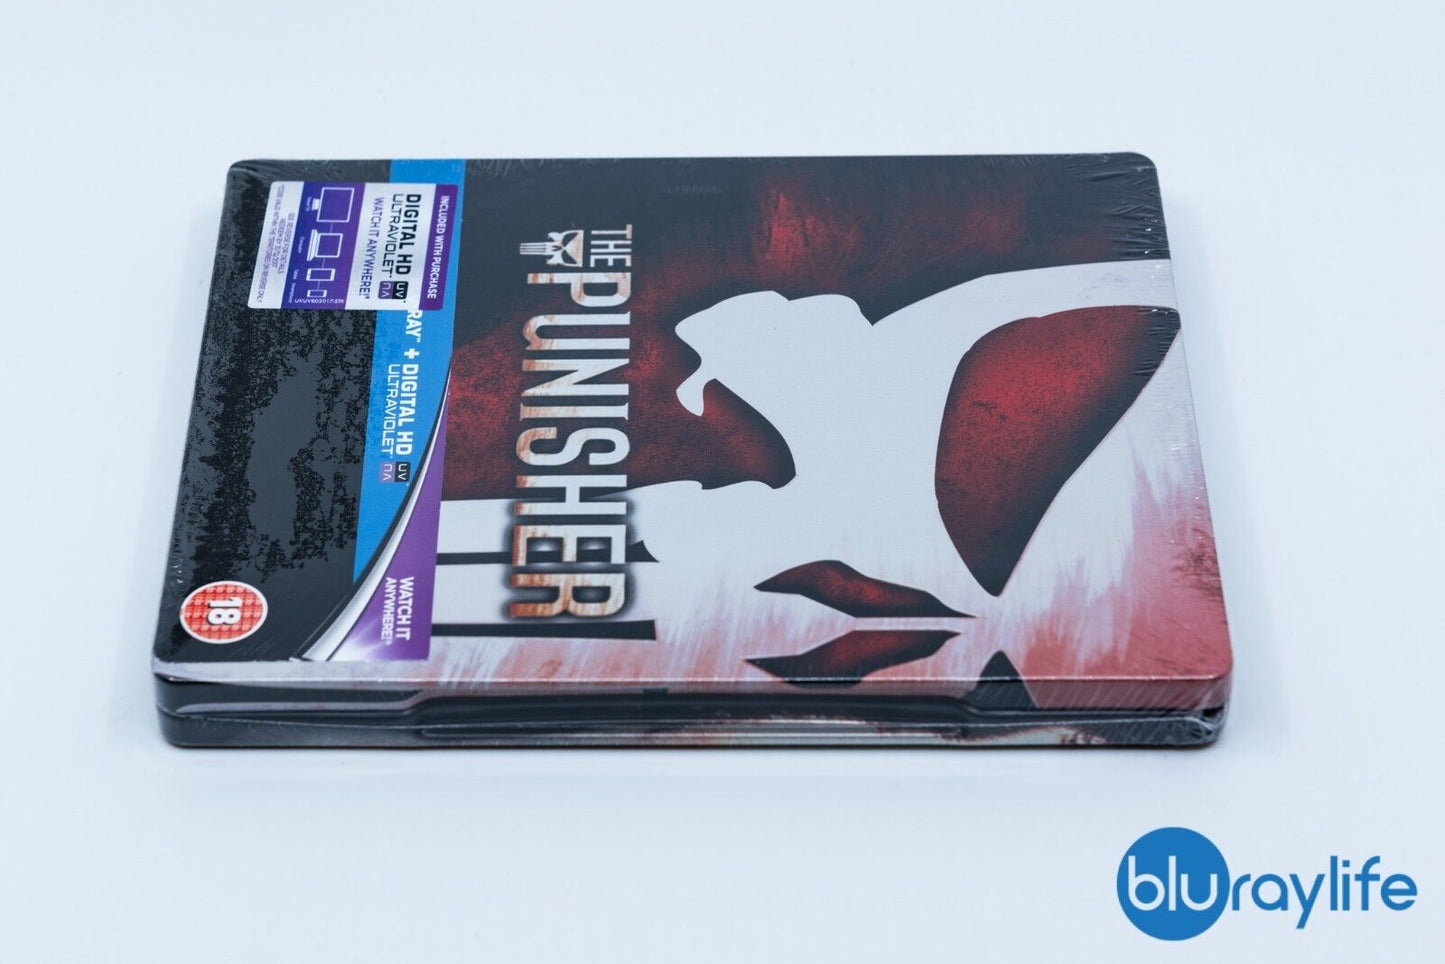 The Punisher Blu-ray Steelbook Zavvi Exclusive